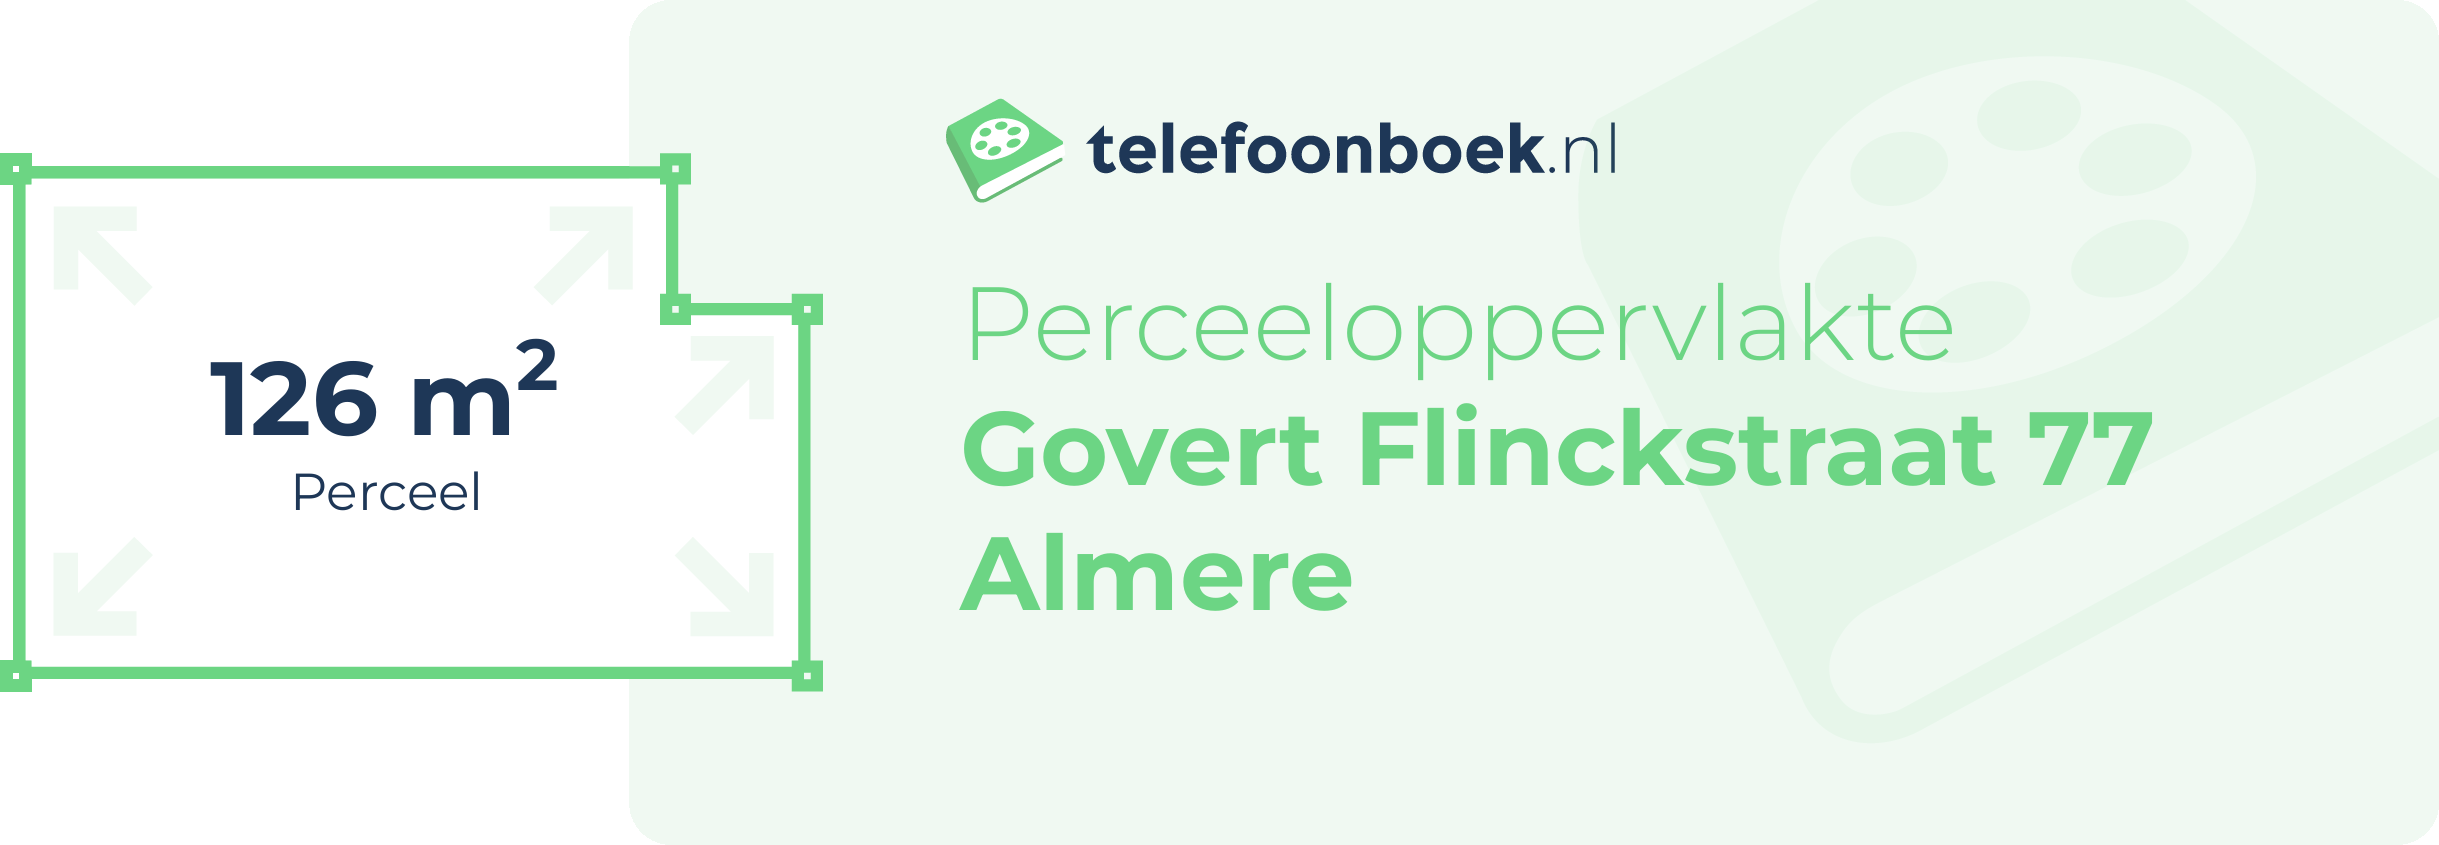 Perceeloppervlakte Govert Flinckstraat 77 Almere